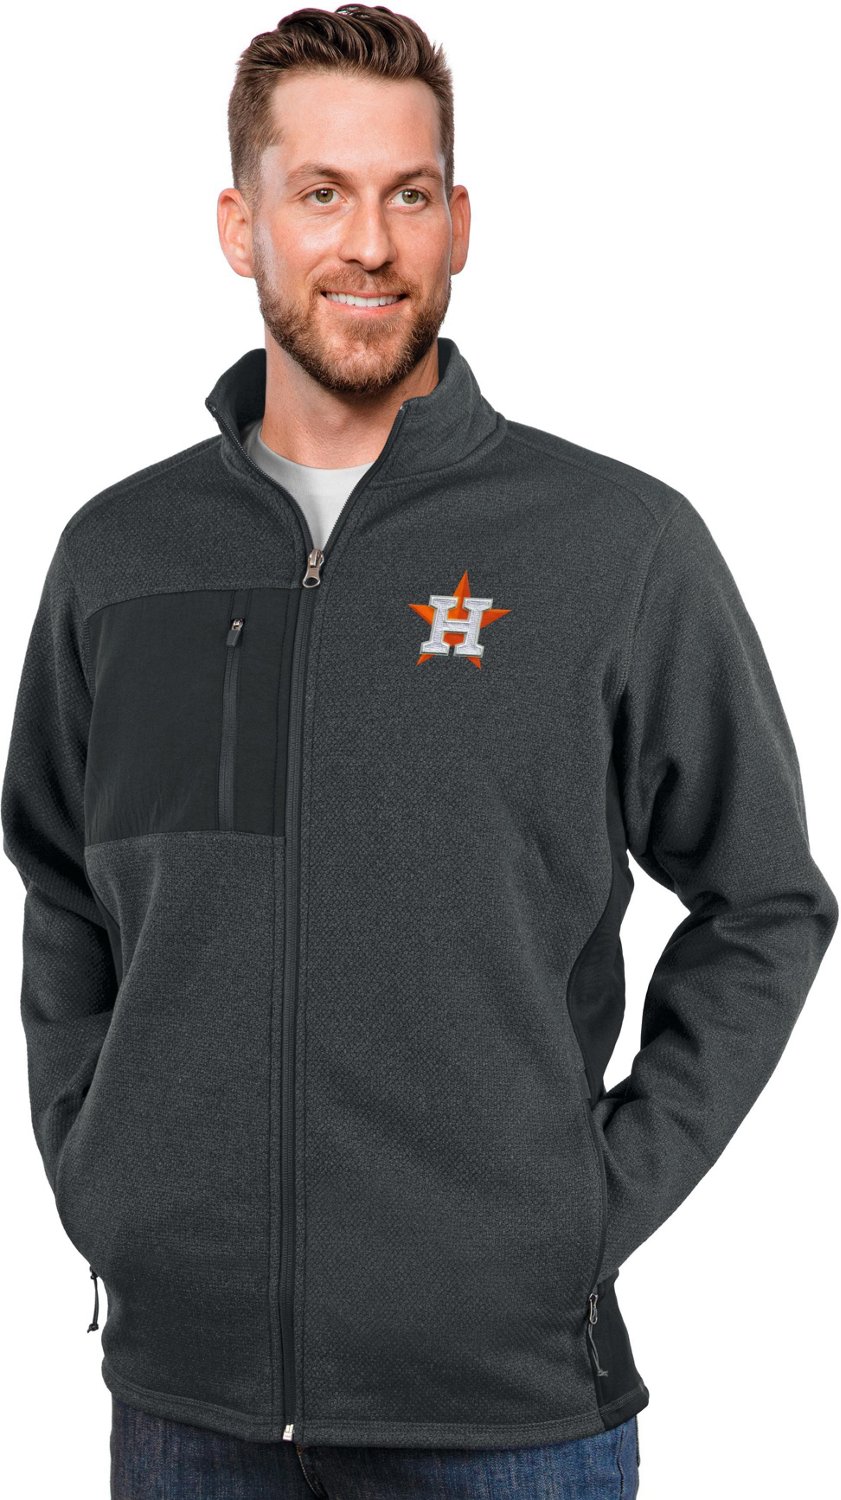 Men's Houston Astros Jacket